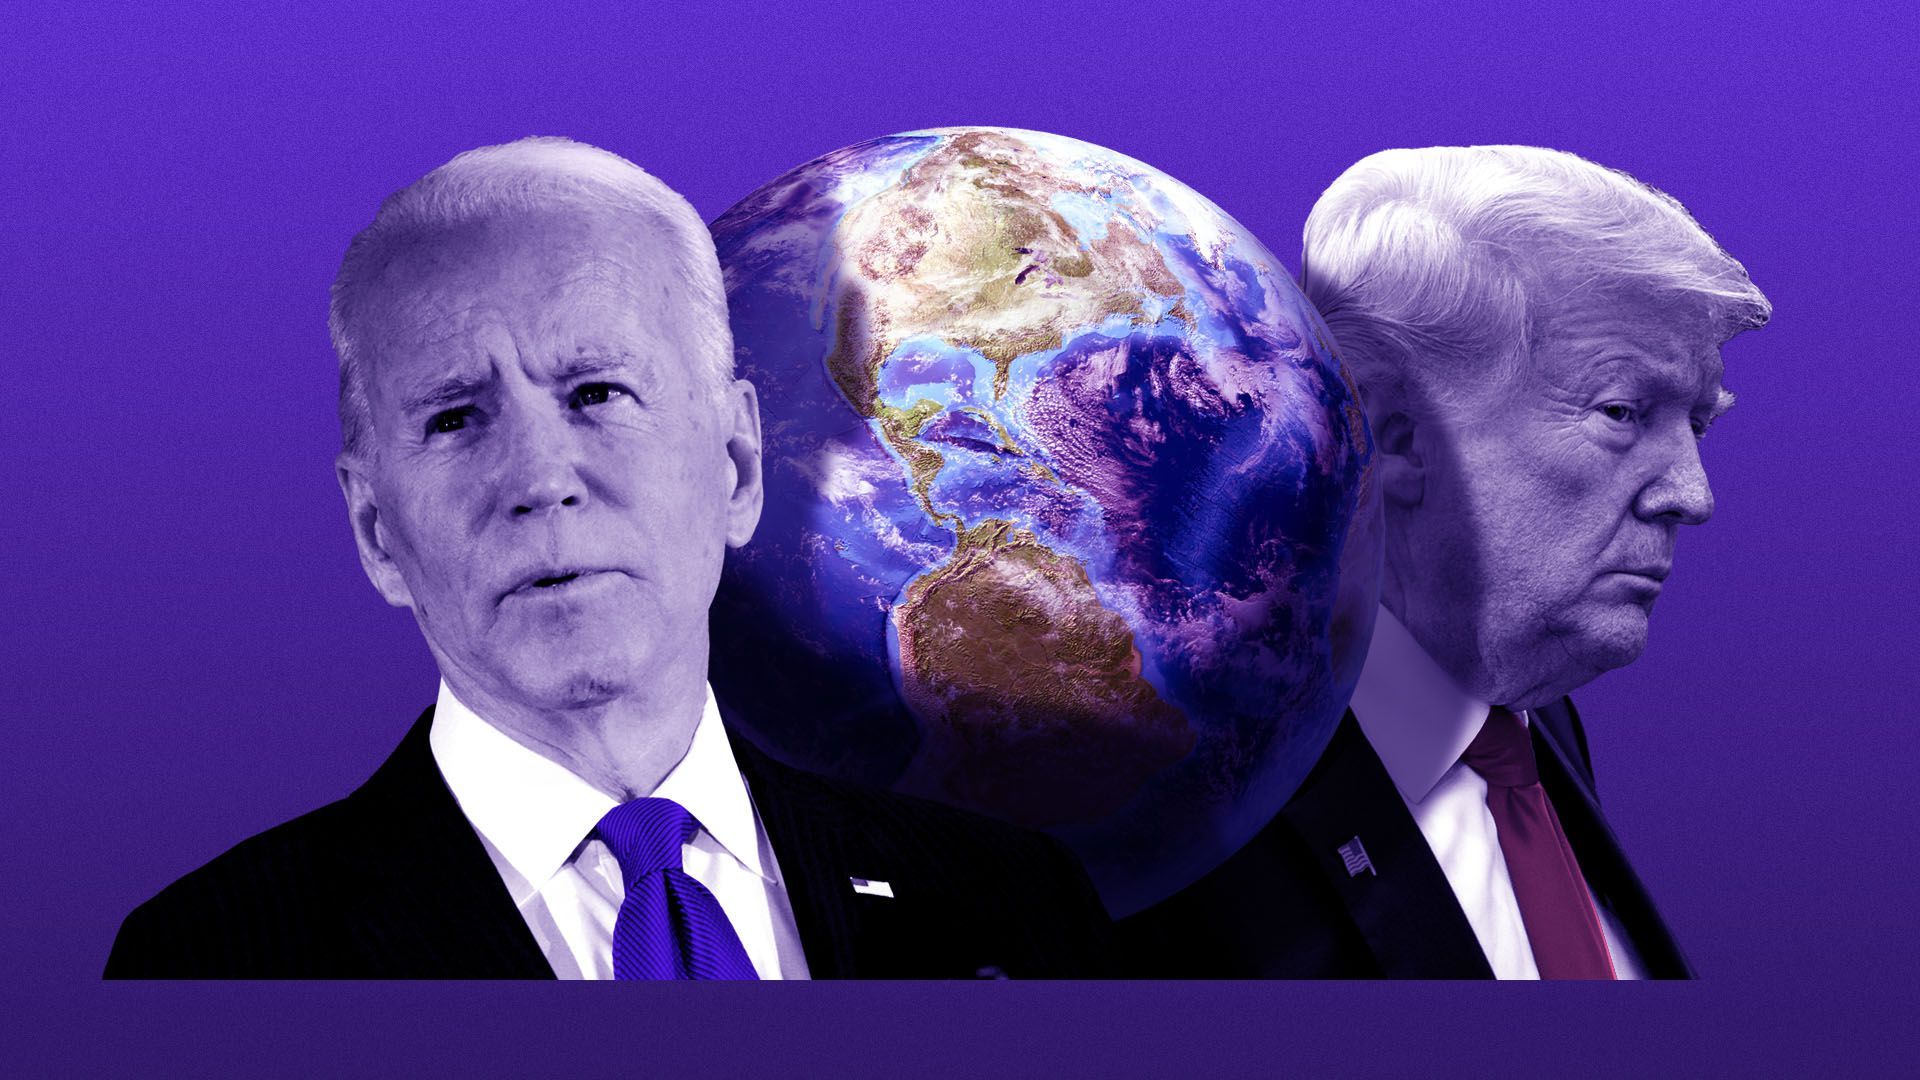 Photo illustration of Joseph Biden and Donald Trump next to a globe